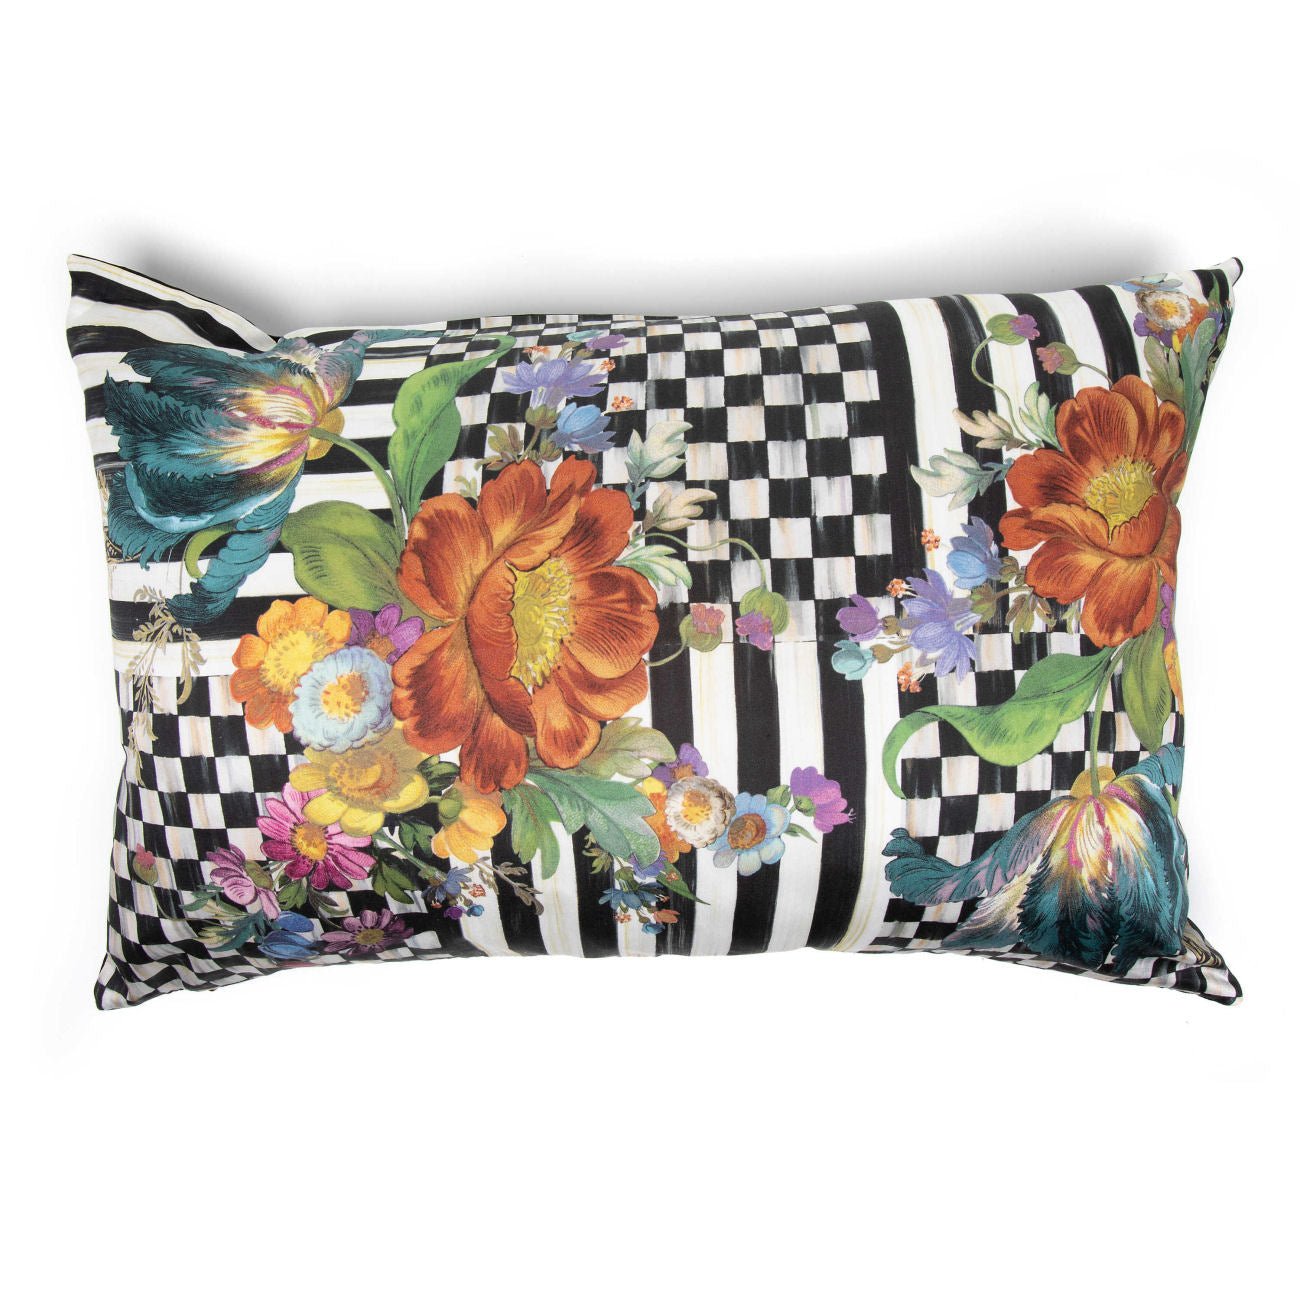 Courtly Flower Market Lumbar Pillow by Mackenzie-Childs - |VESIMI Design|